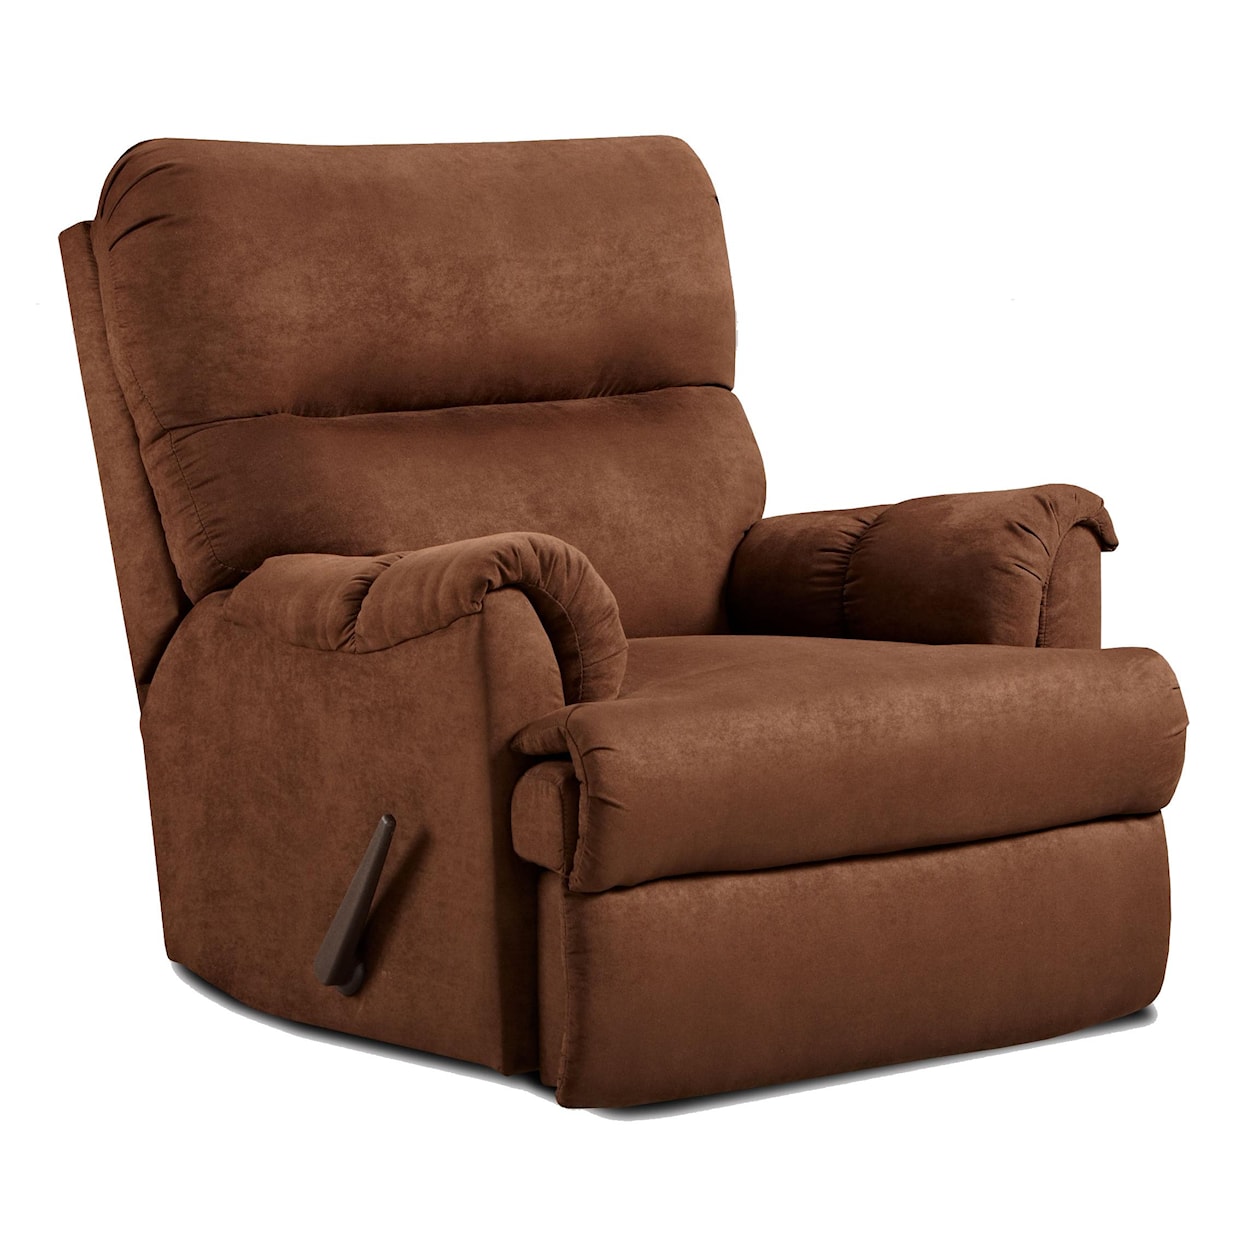 Affordable Furniture 2155 Aruba Chocolate Rocker Recliner